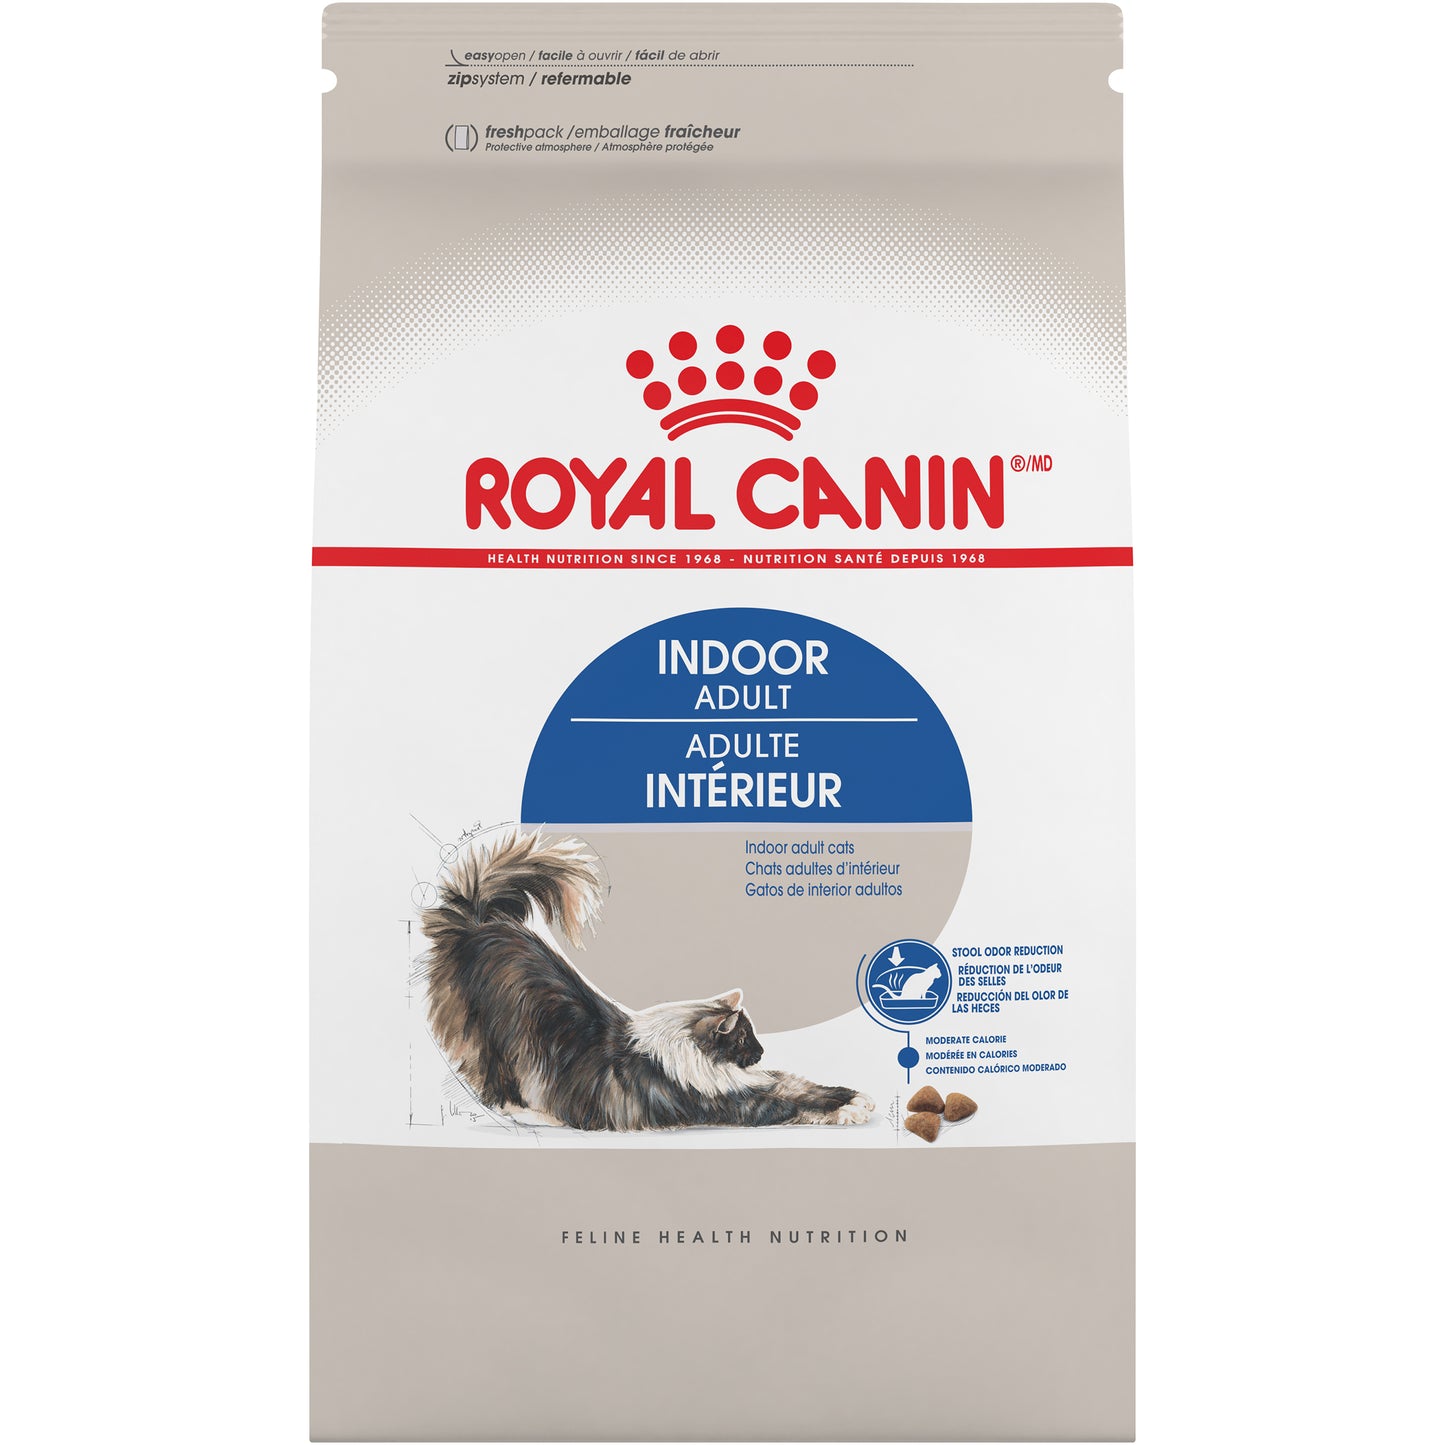 Royal Canin Feline Health Nutrition Indoor Adult Dry Cat Food, 7-lb (Size: 7-lb)